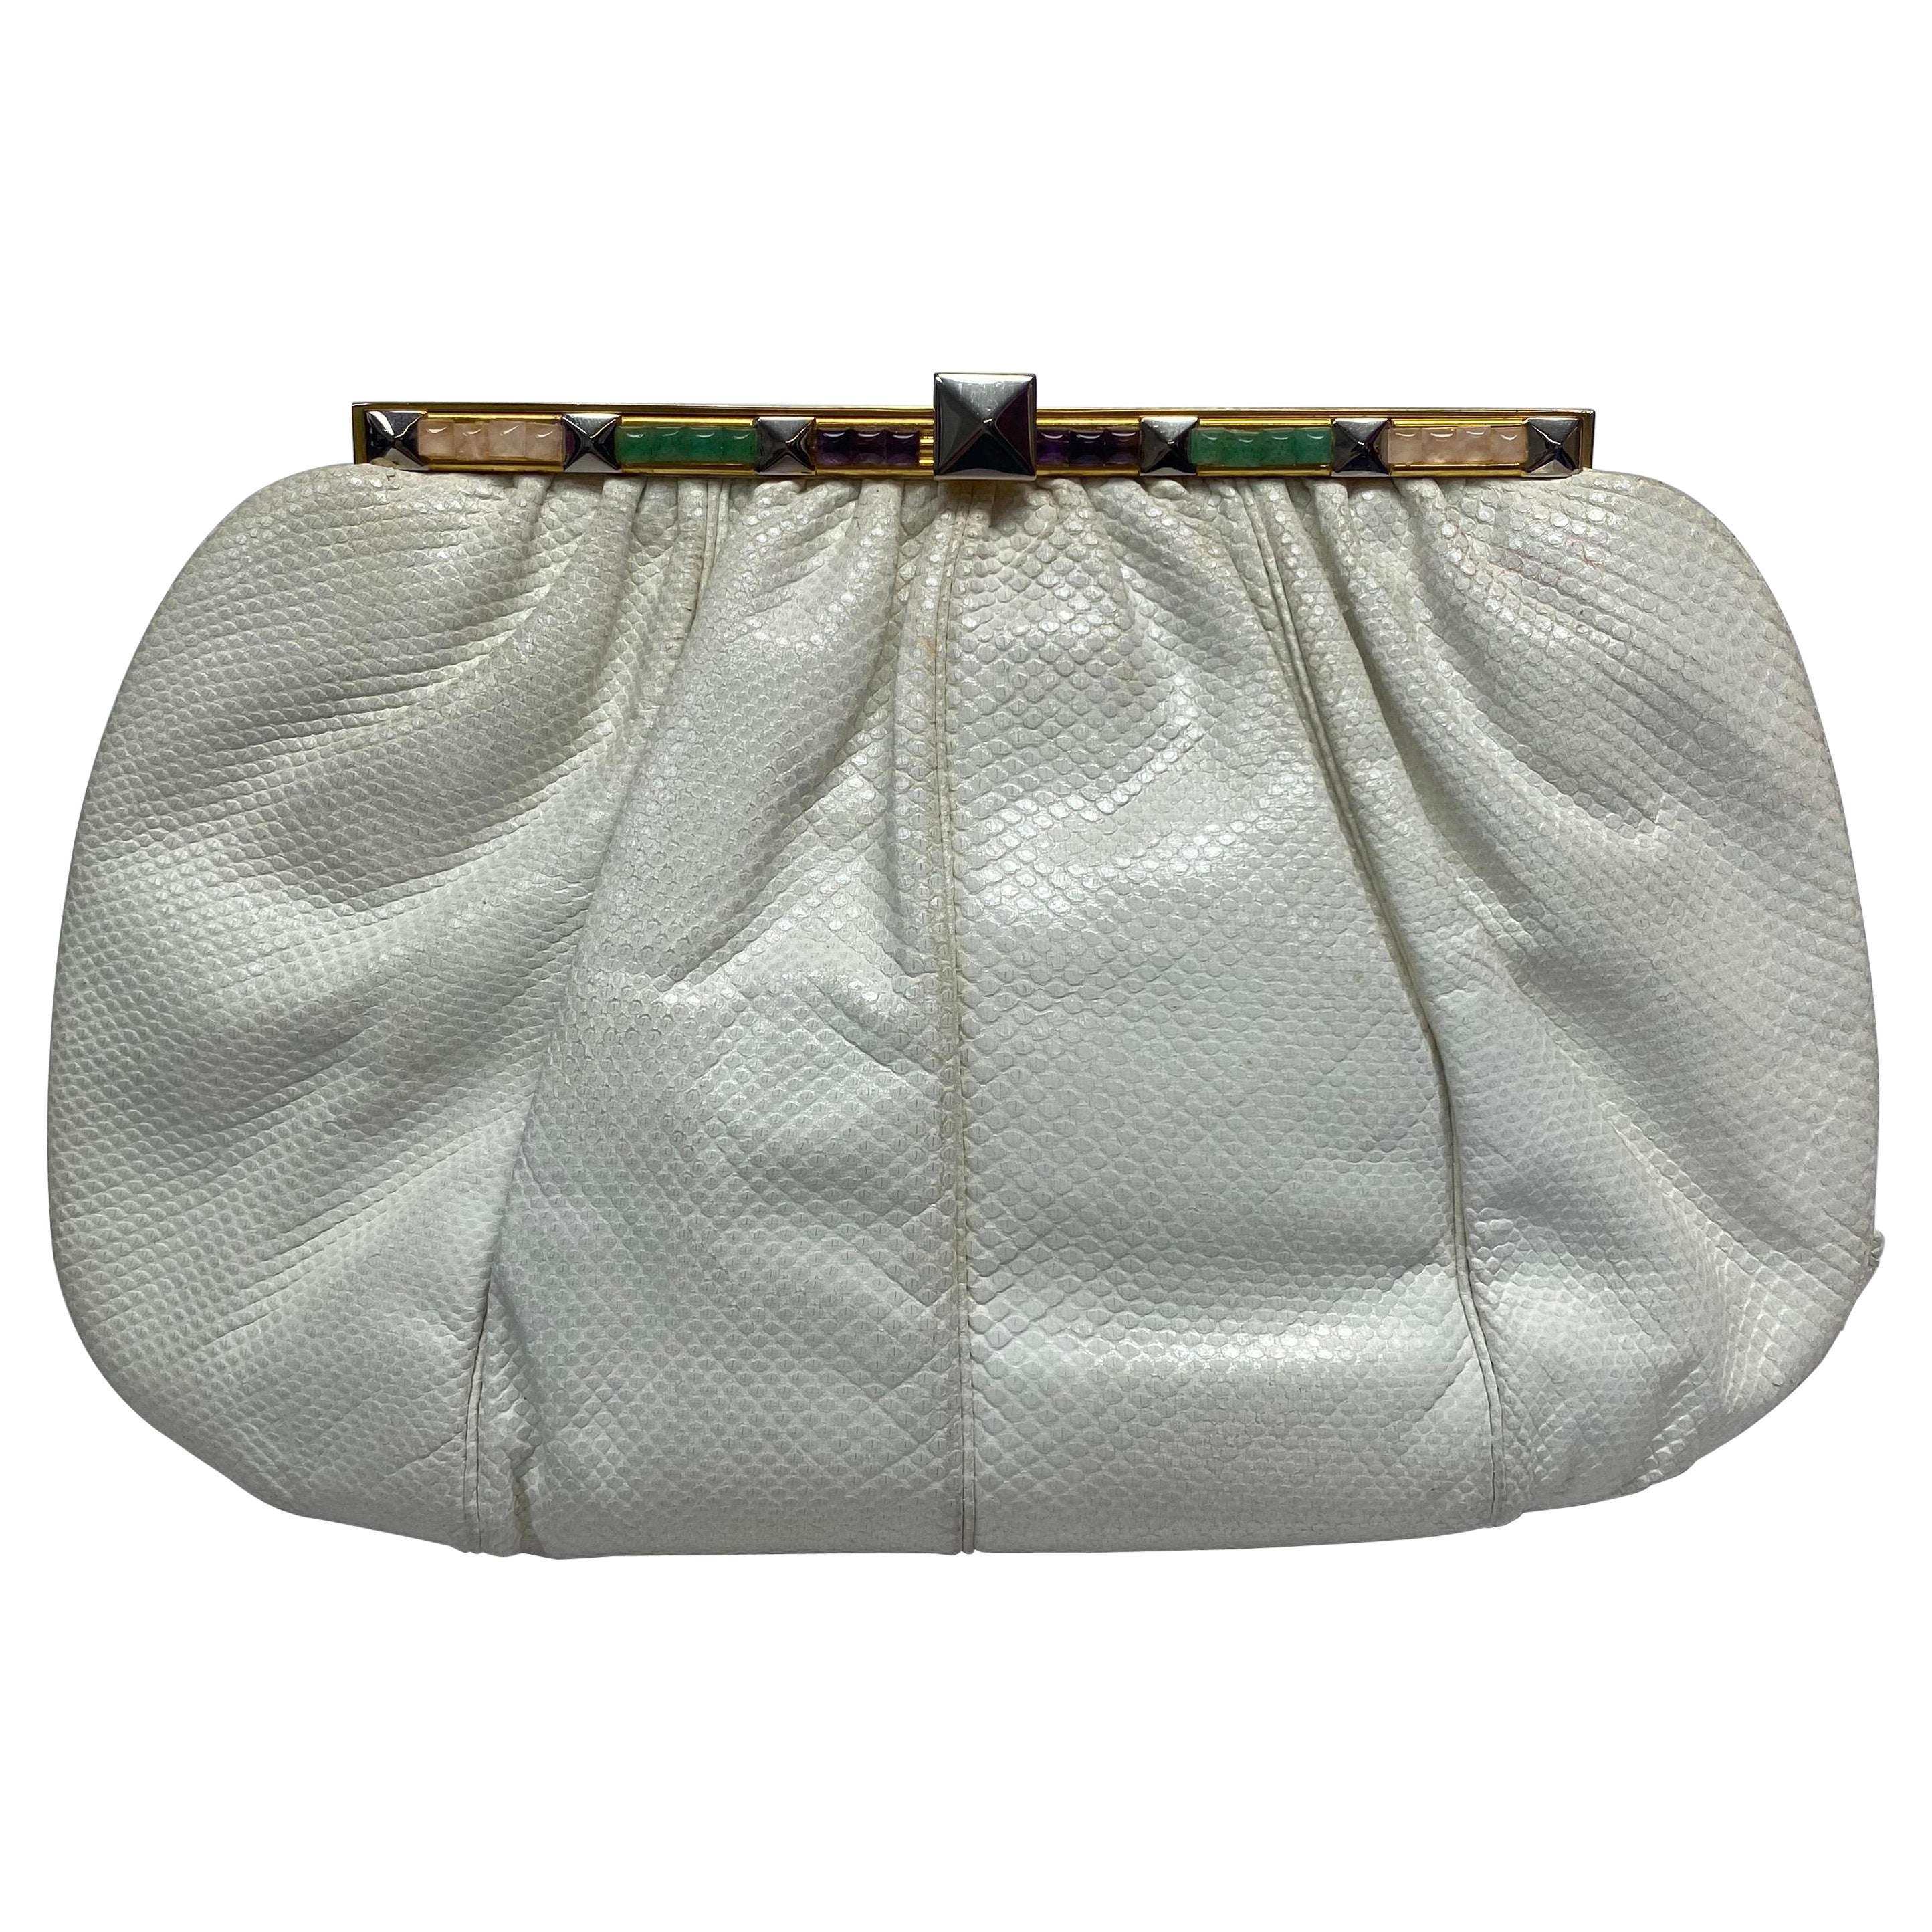 Lot - Judith Leiber snakeskin clutch purse with removable shoulder strap,  interior zip pocket, 8